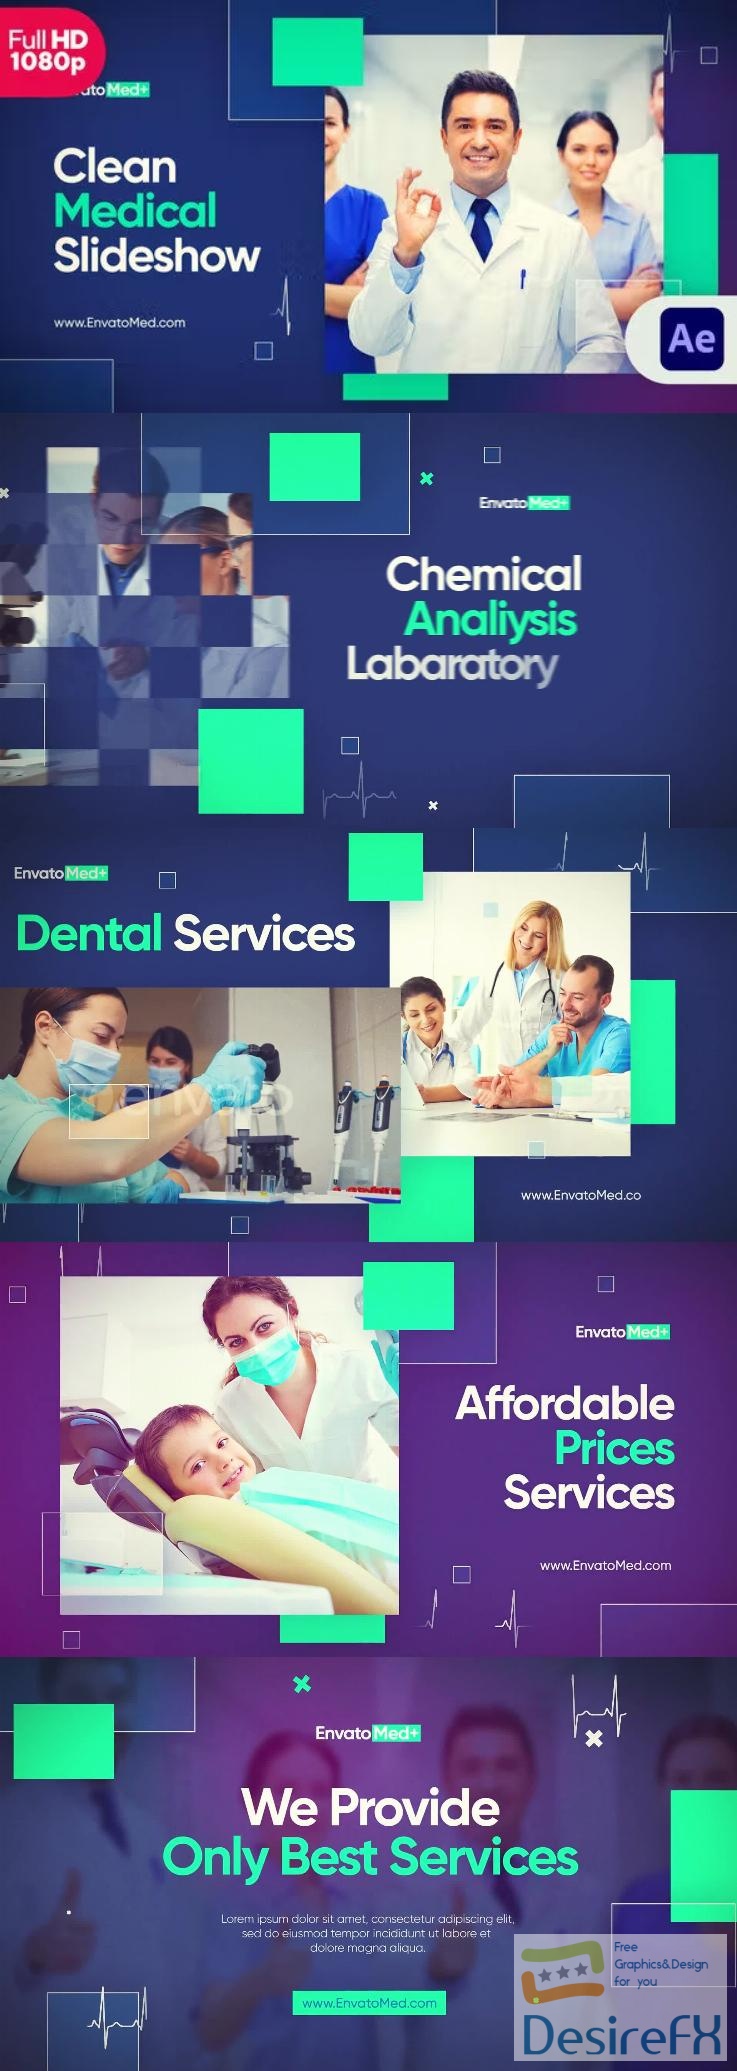 Videohive - Clean Medical Slideshow Parallax Slideshow - 38195724